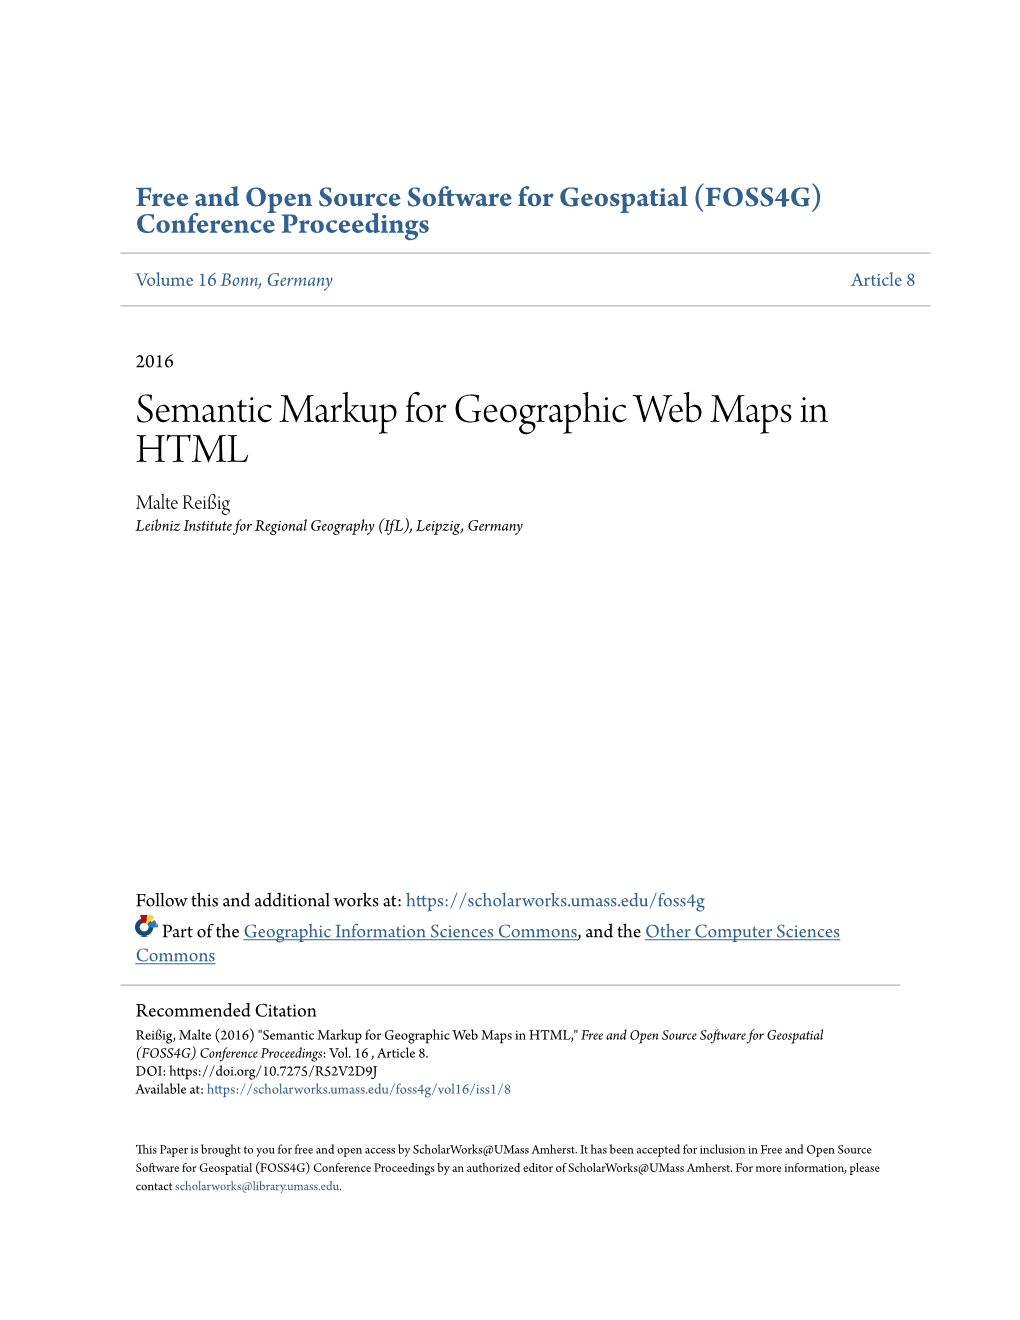 Semantic Markup for Geographic Web Maps in HTML Malte Reißig Leibniz Institute for Regional Geography (Ifl), Leipzig, Germany